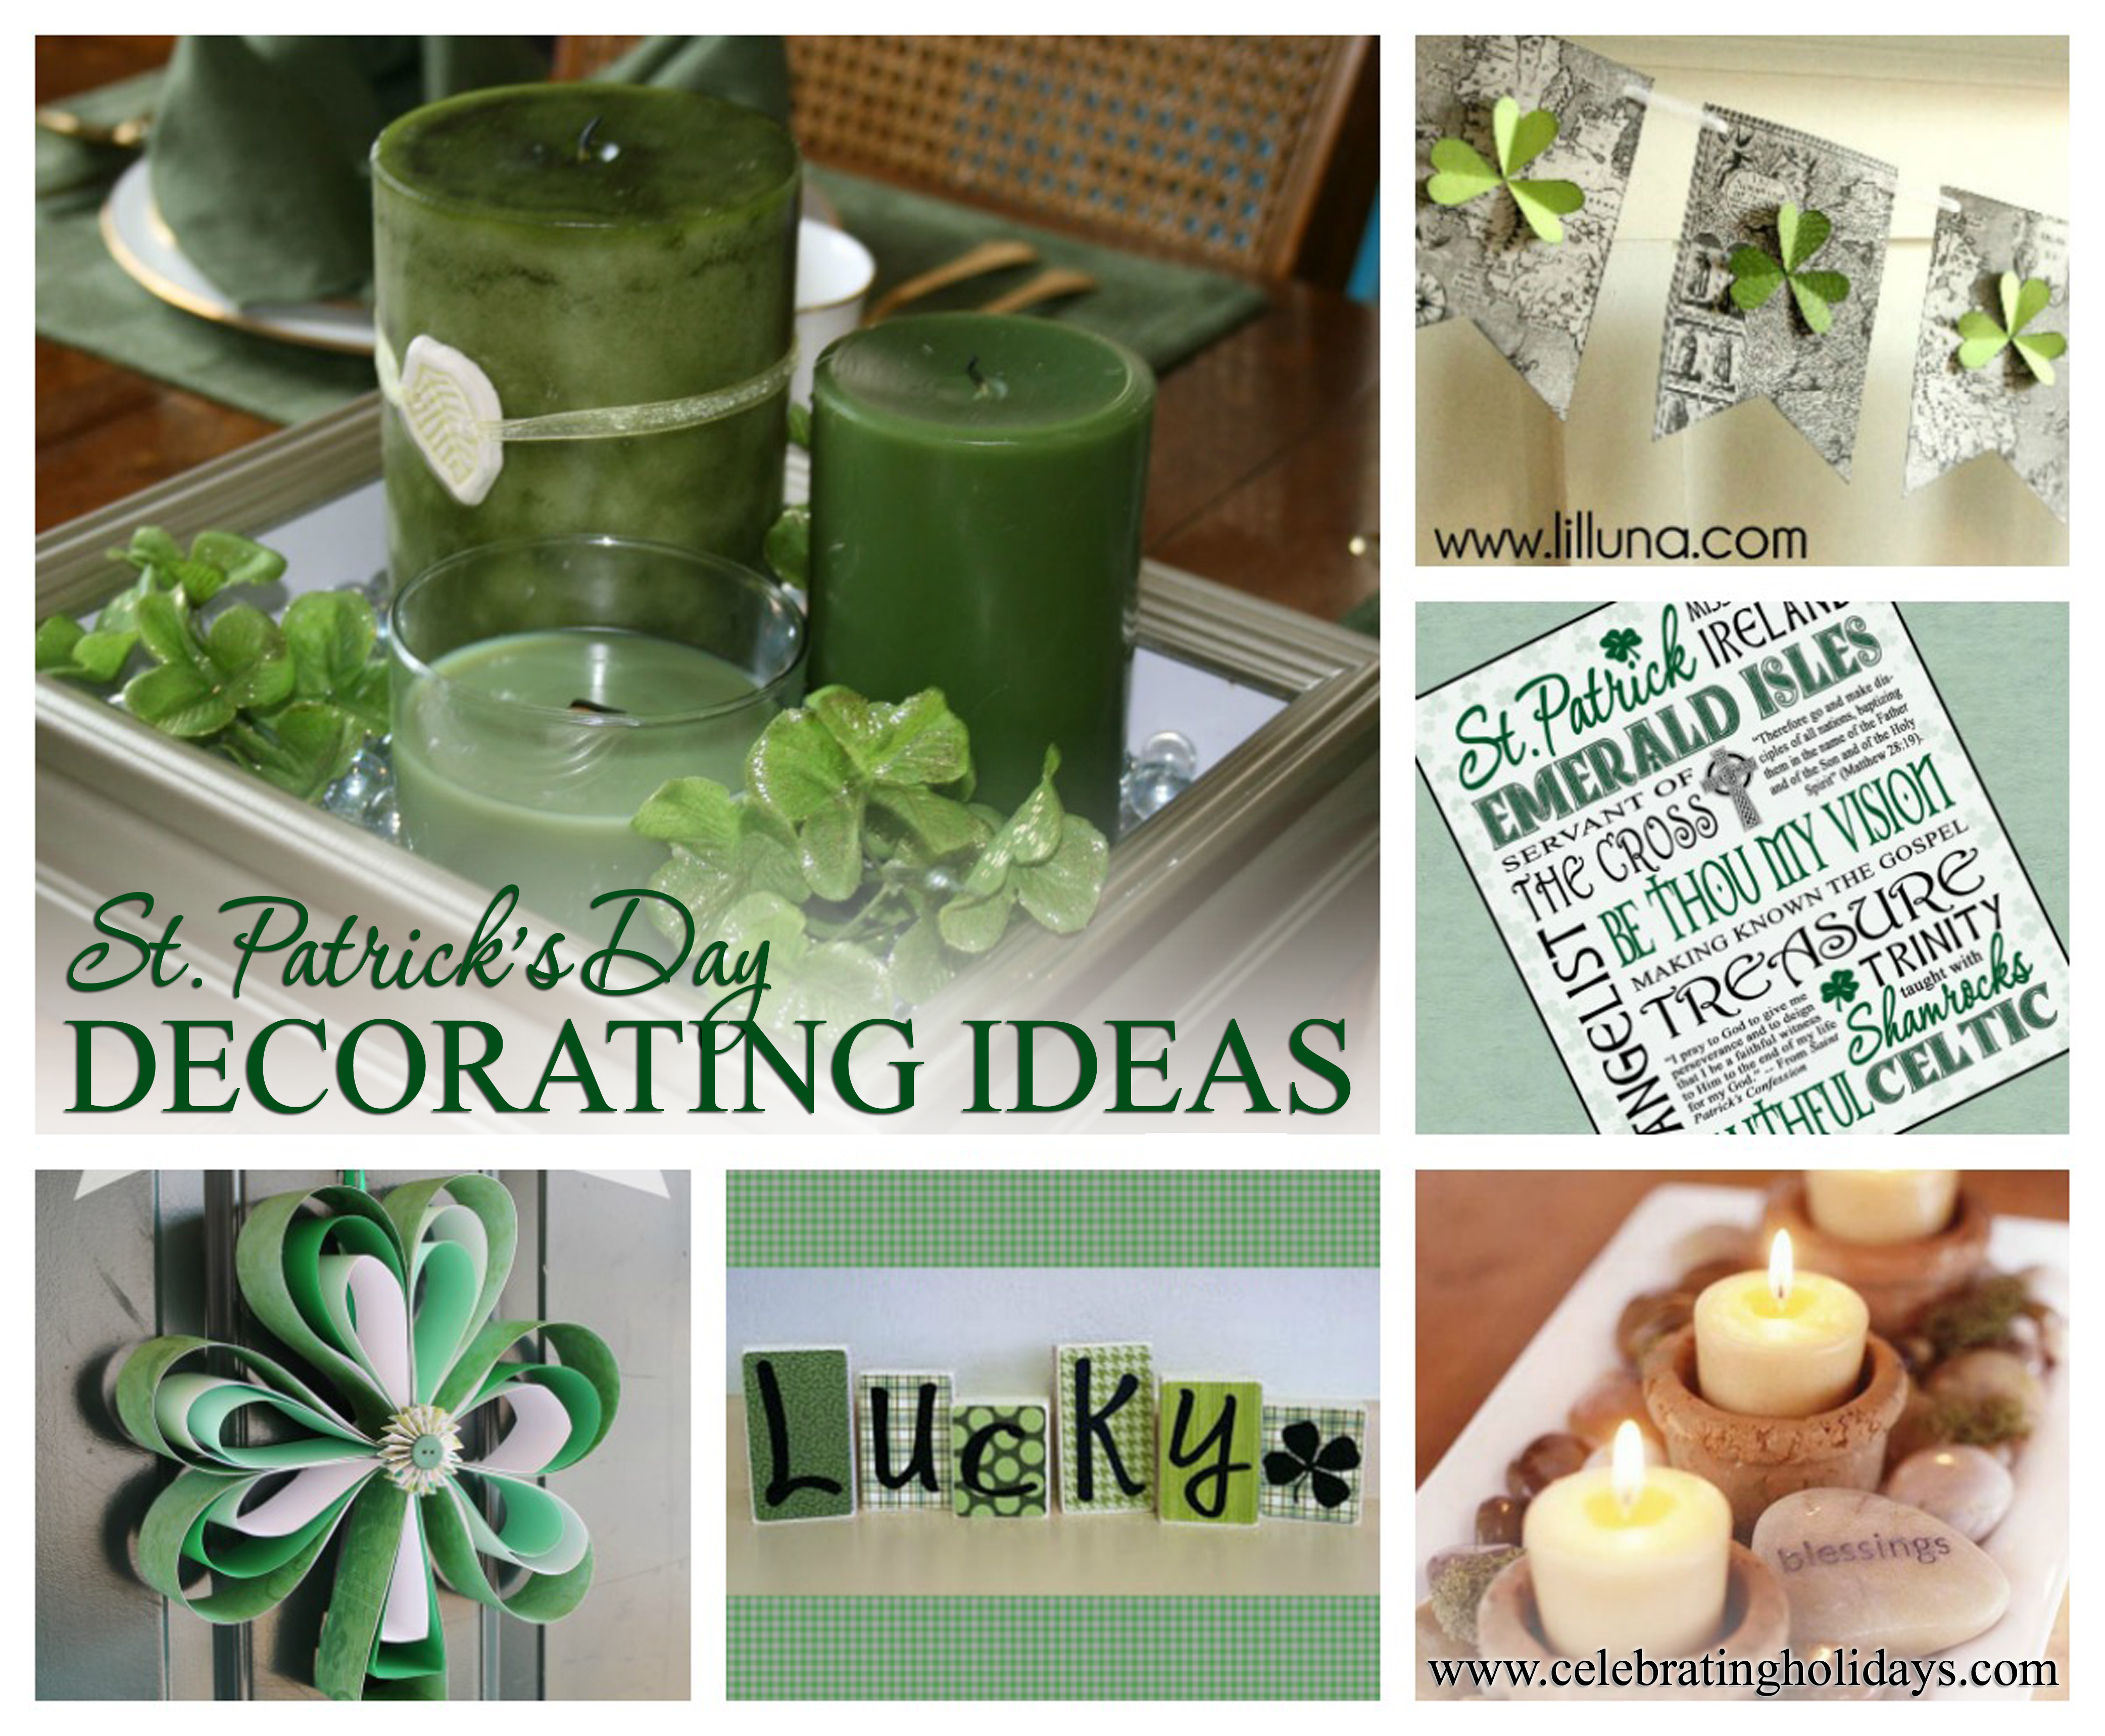 St. Patrick's Day Decorating Ideas